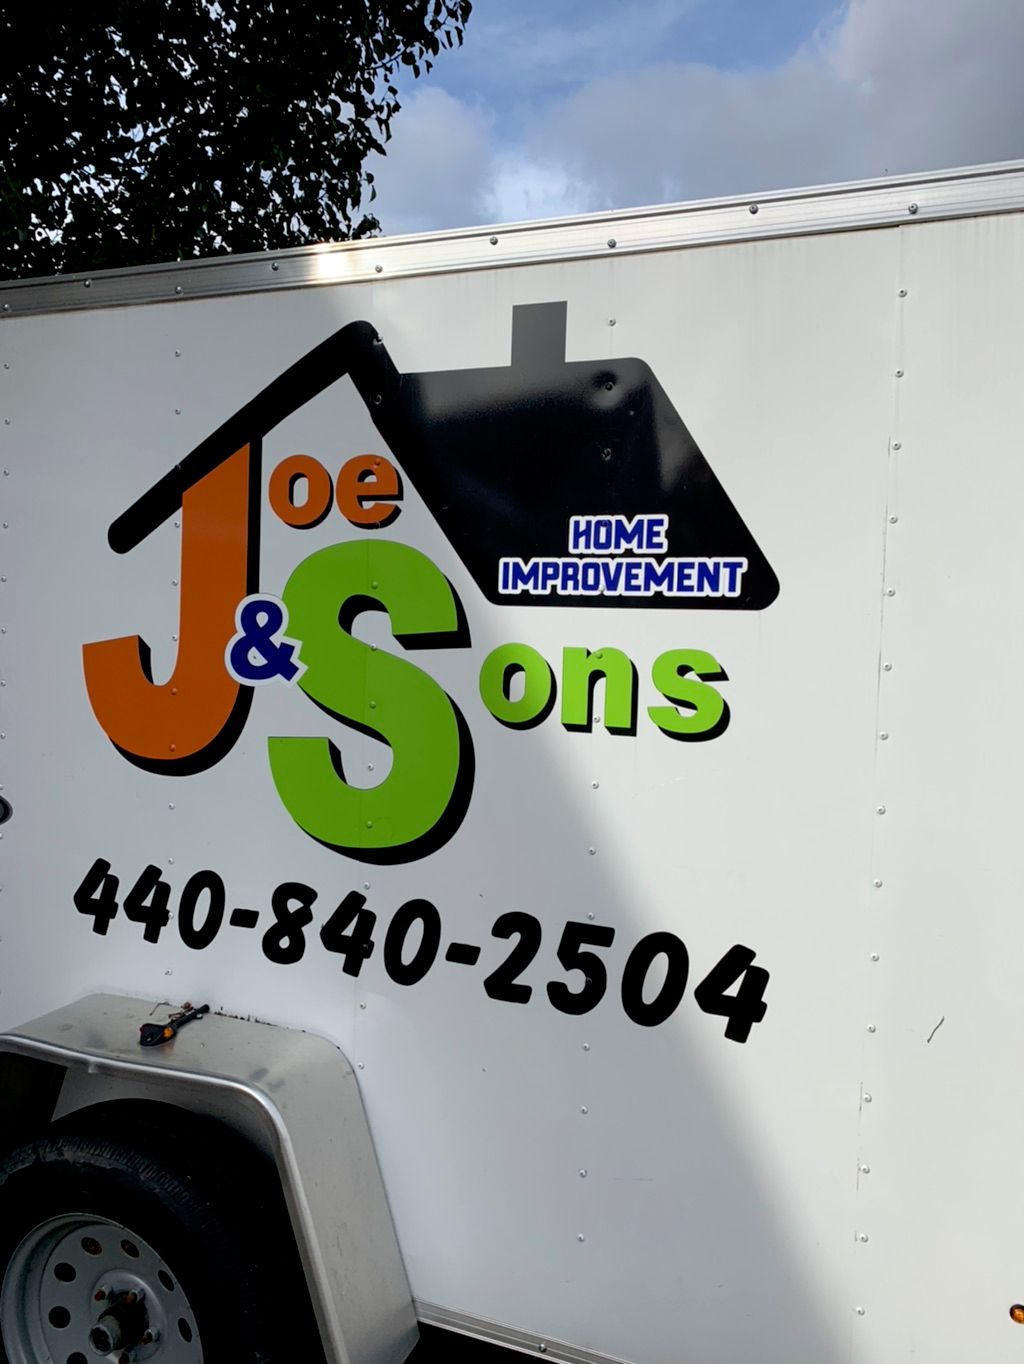 Joe & Sons Home Improvements